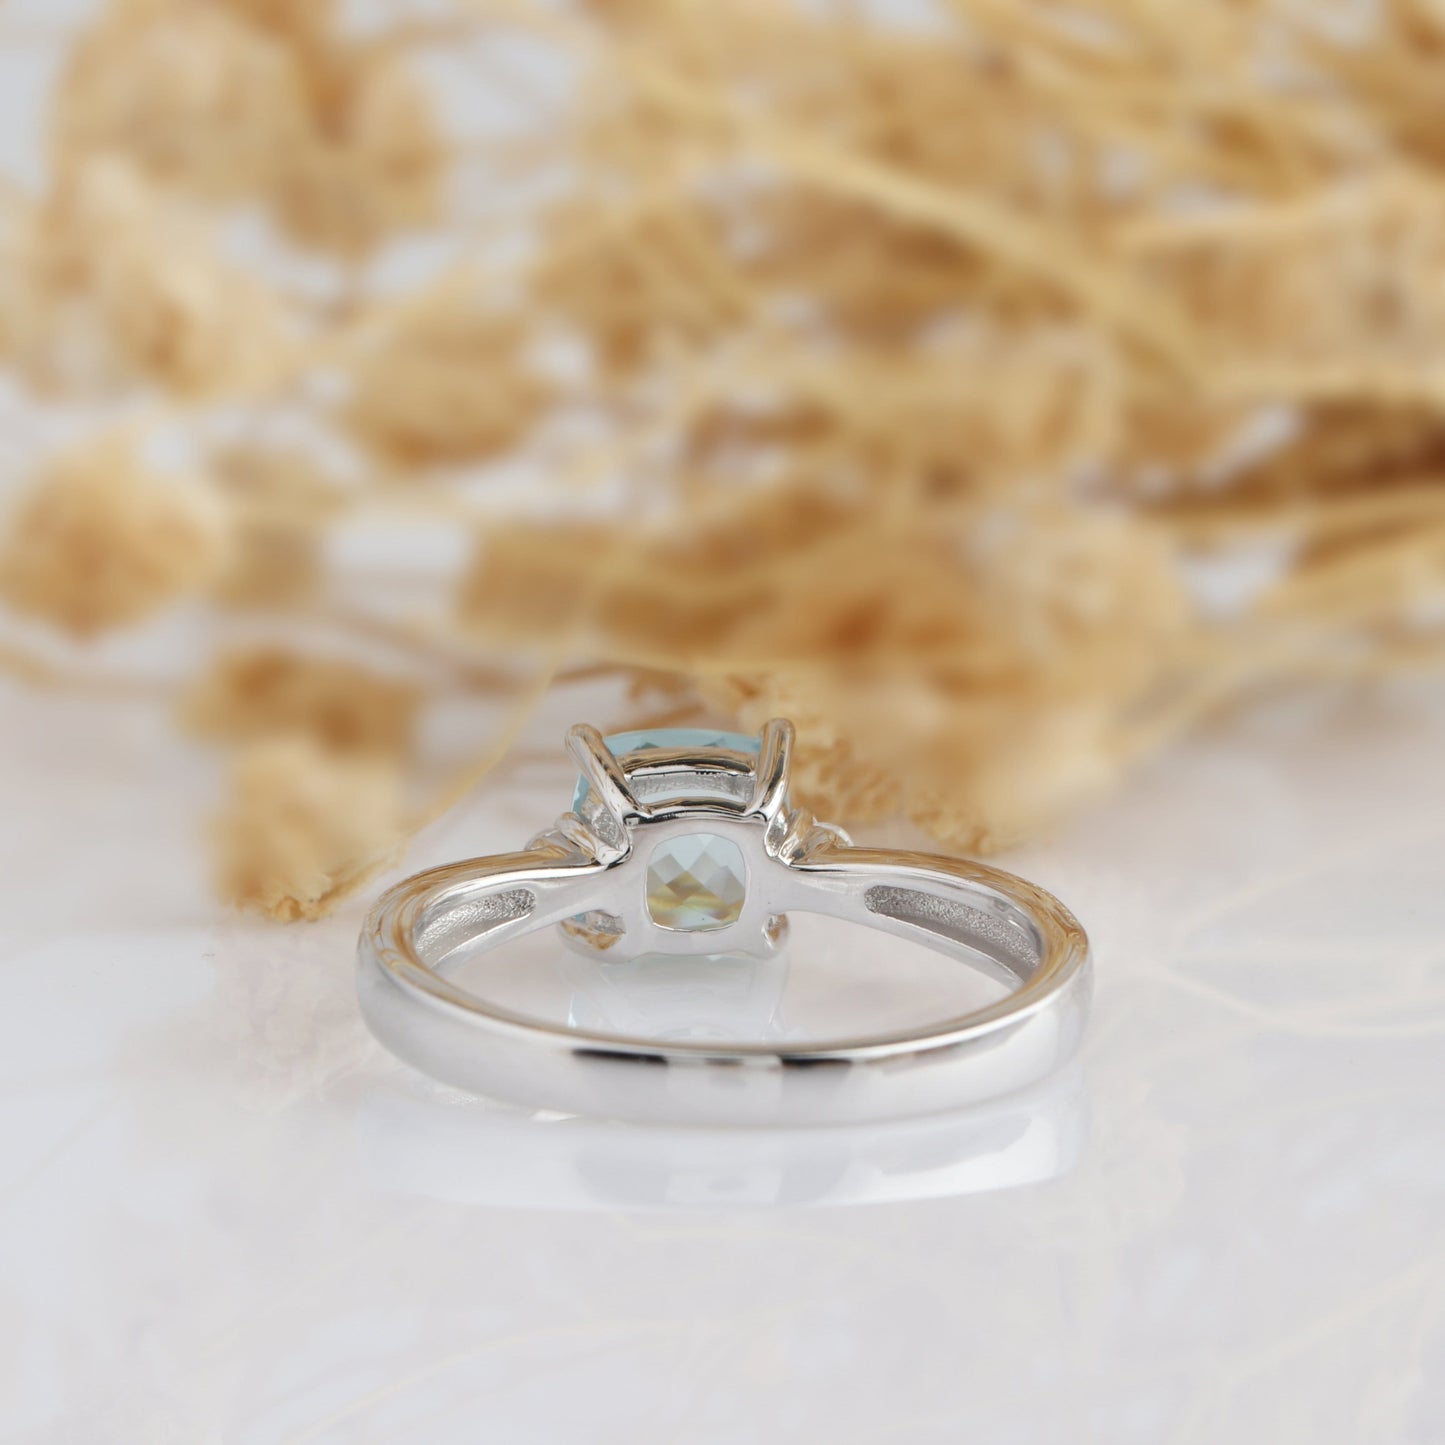 Cushion Cut 7x7mm Natural Aquamarine Ring, Vintage 14k White Gold Engagement Ring